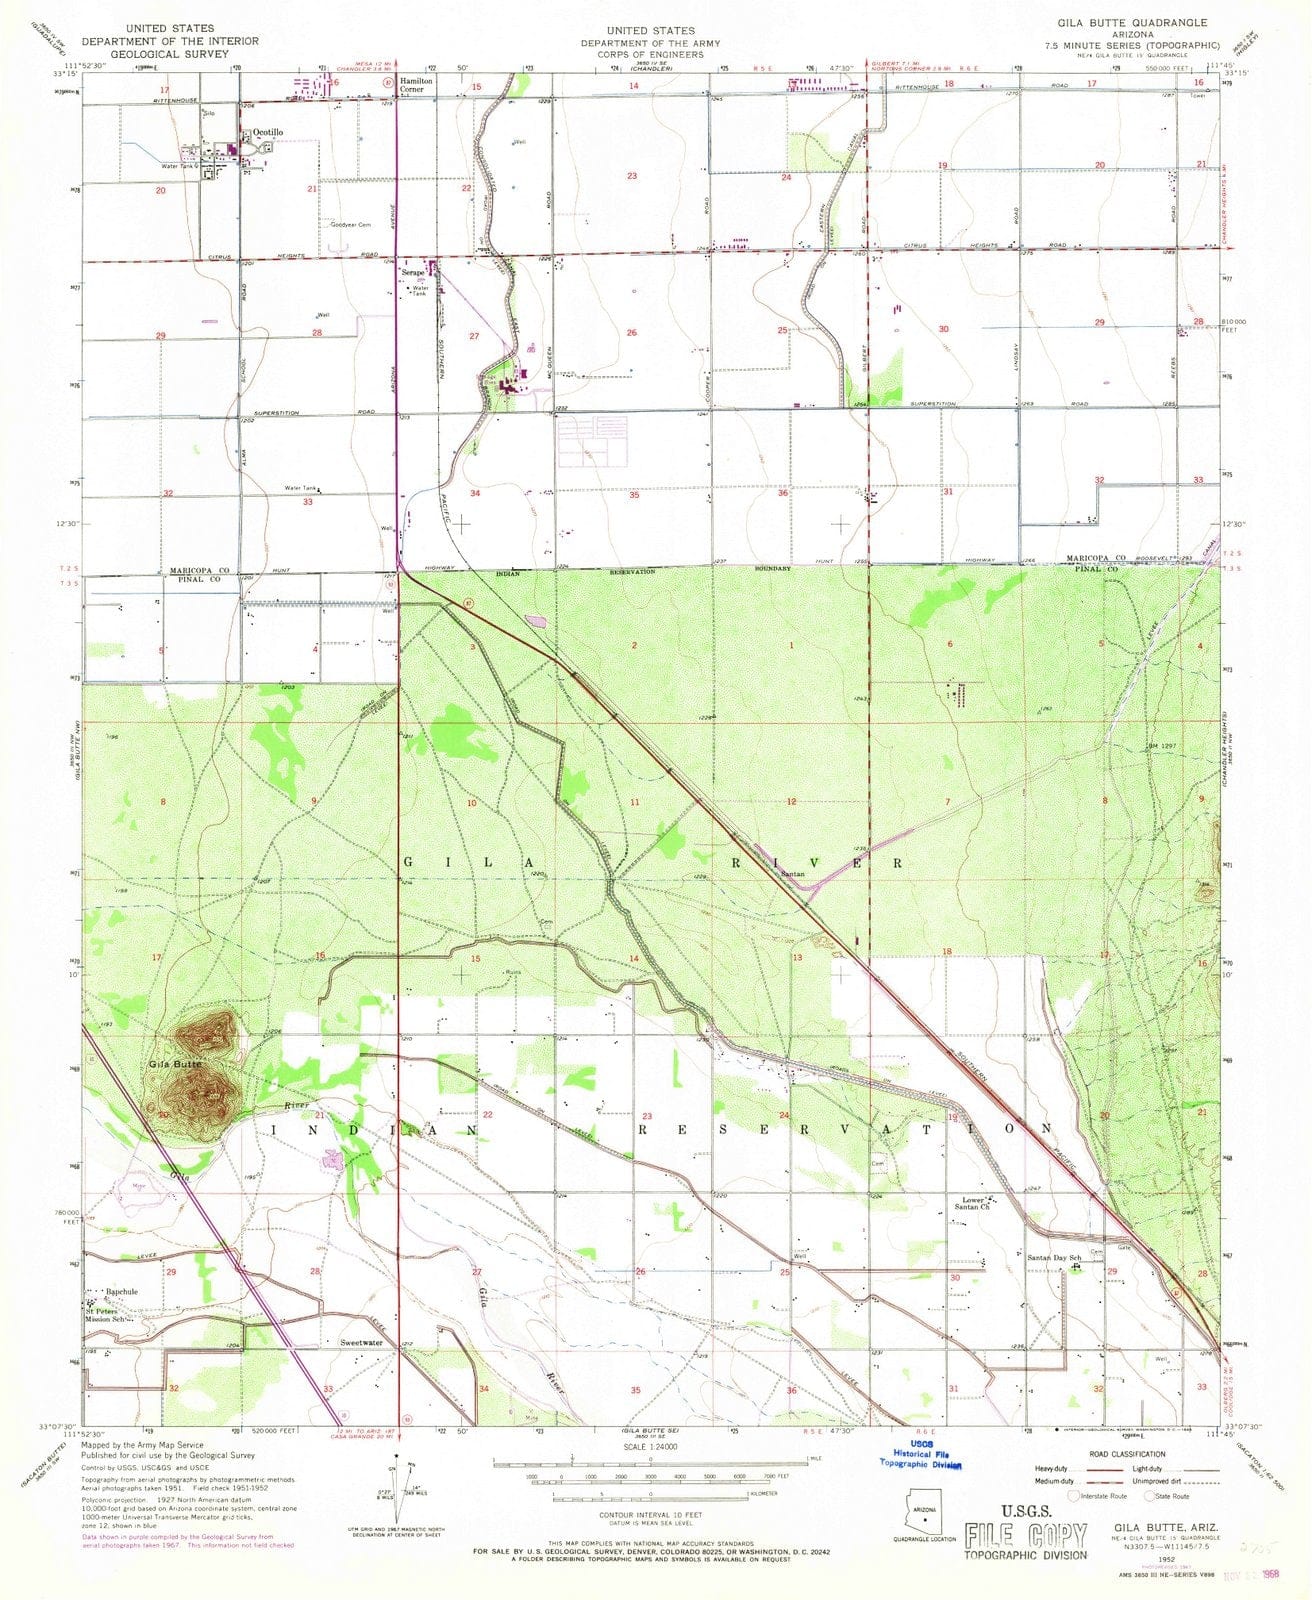 1952 Gila Butte, AZ - Arizona - USGS Topographic Map v3